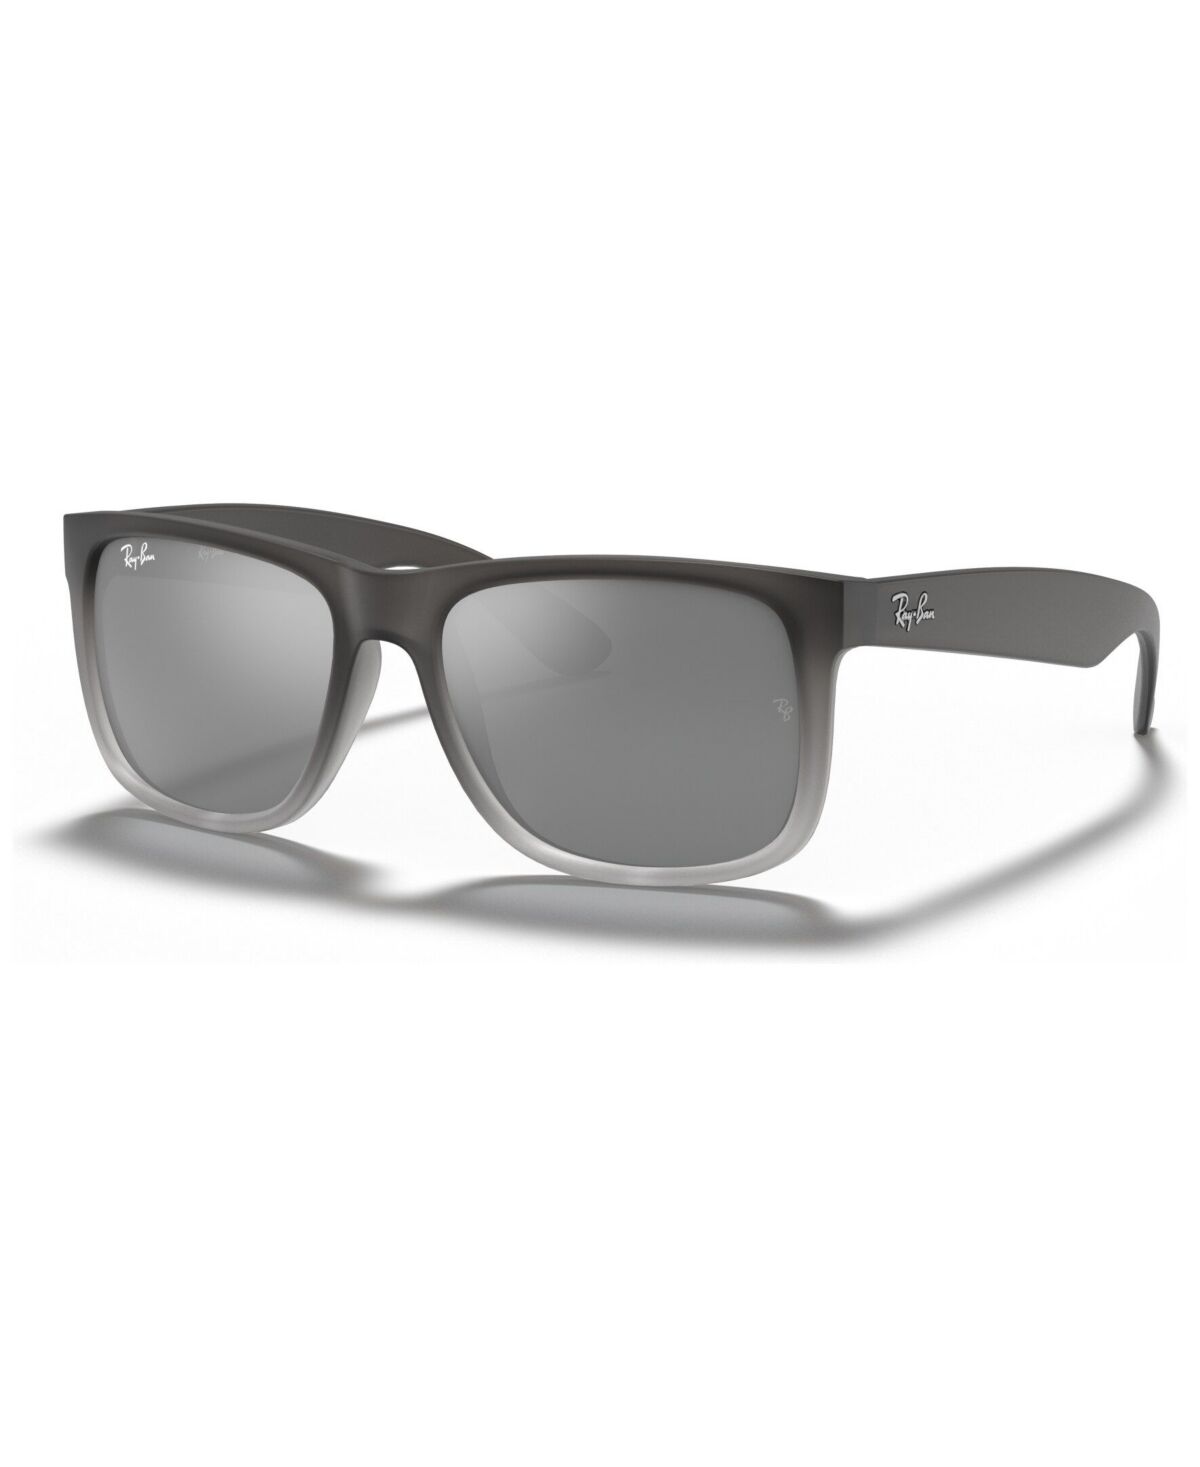 Ray-Ban Unisex Sunglasses, RB4165 Justin Mirror - GREY/SILVER GRADIENT MIRROR